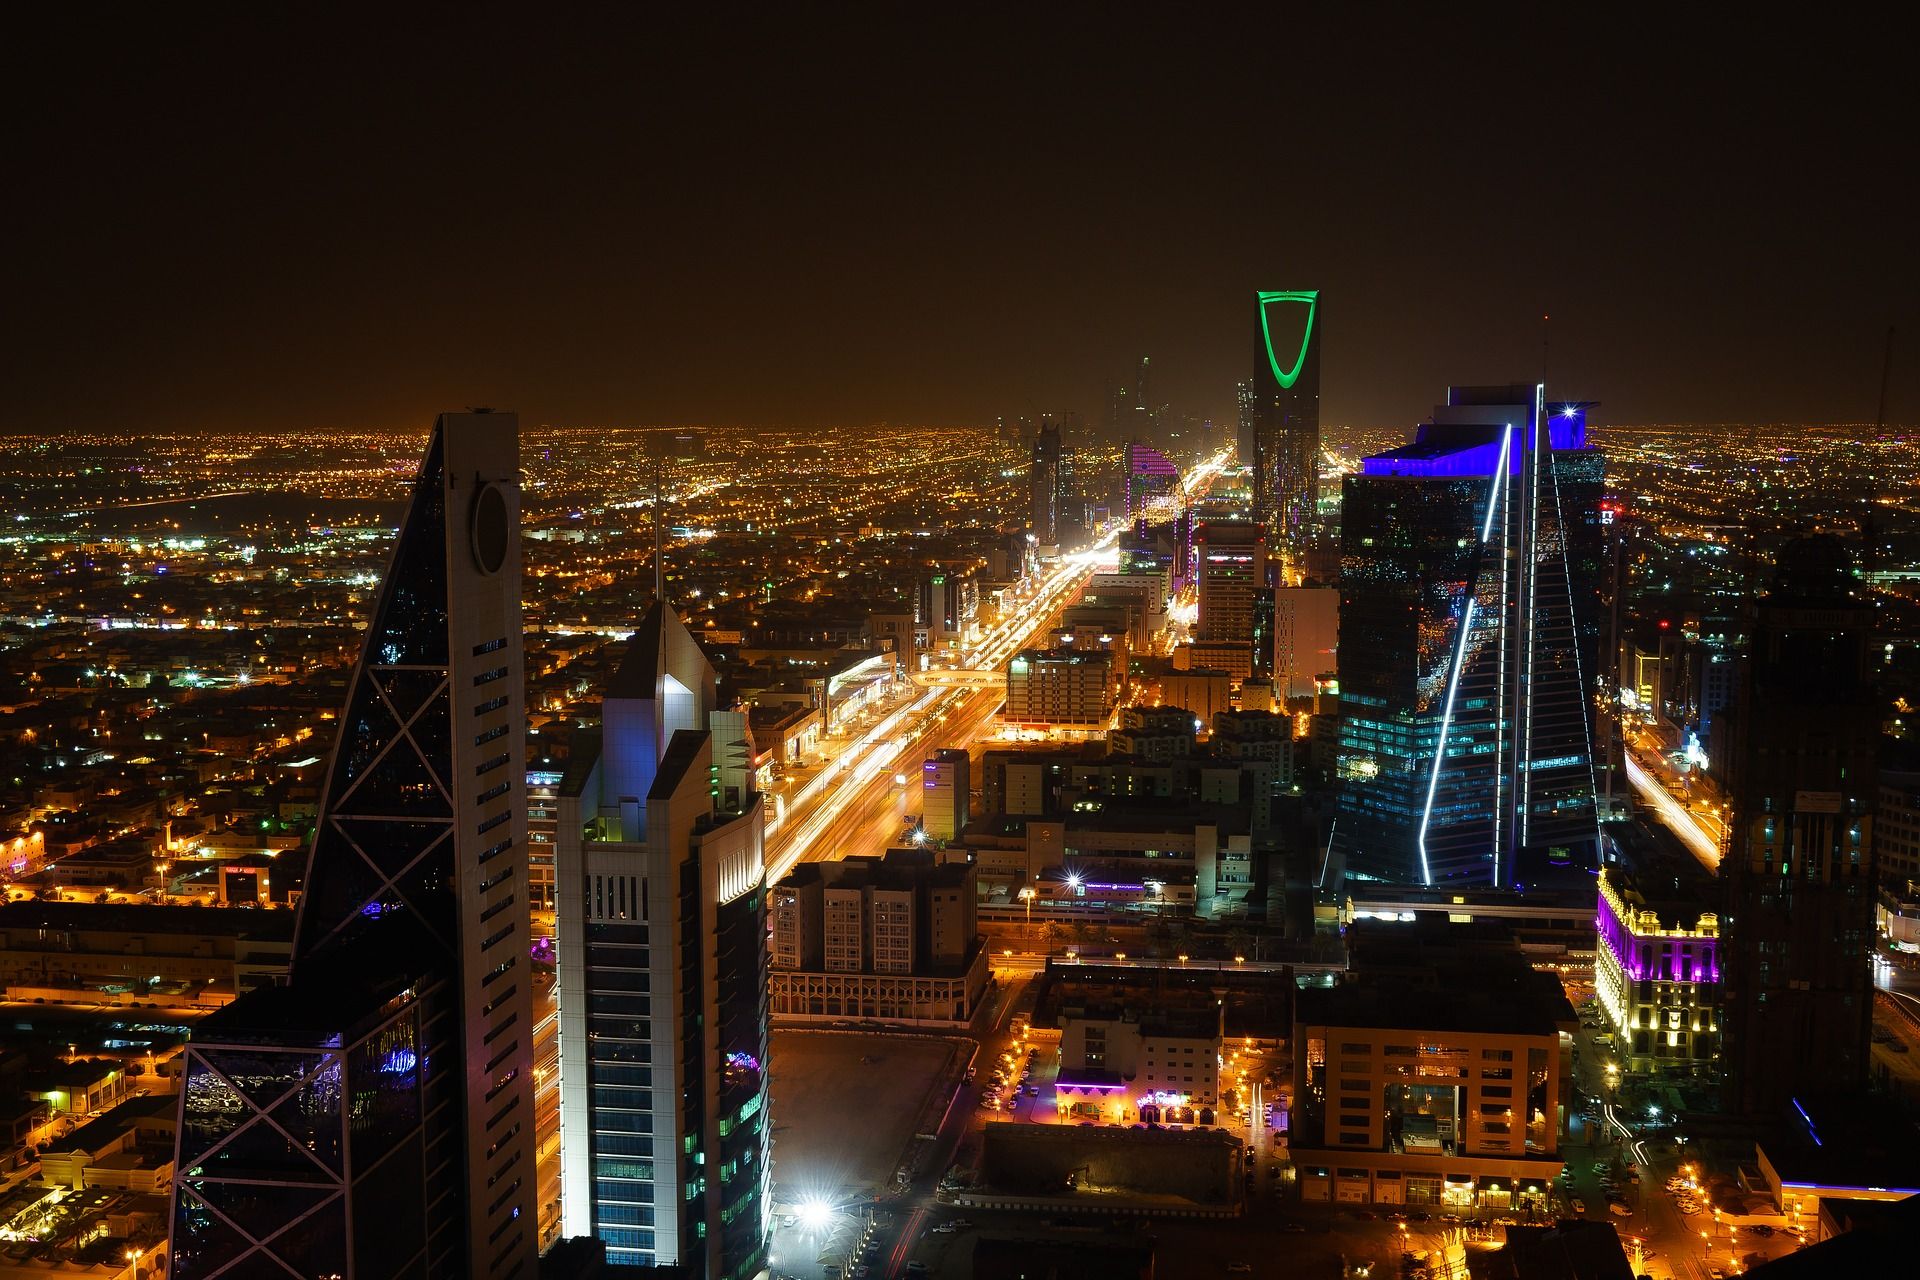 Riyadh at night. Image courtesy Pixabay.